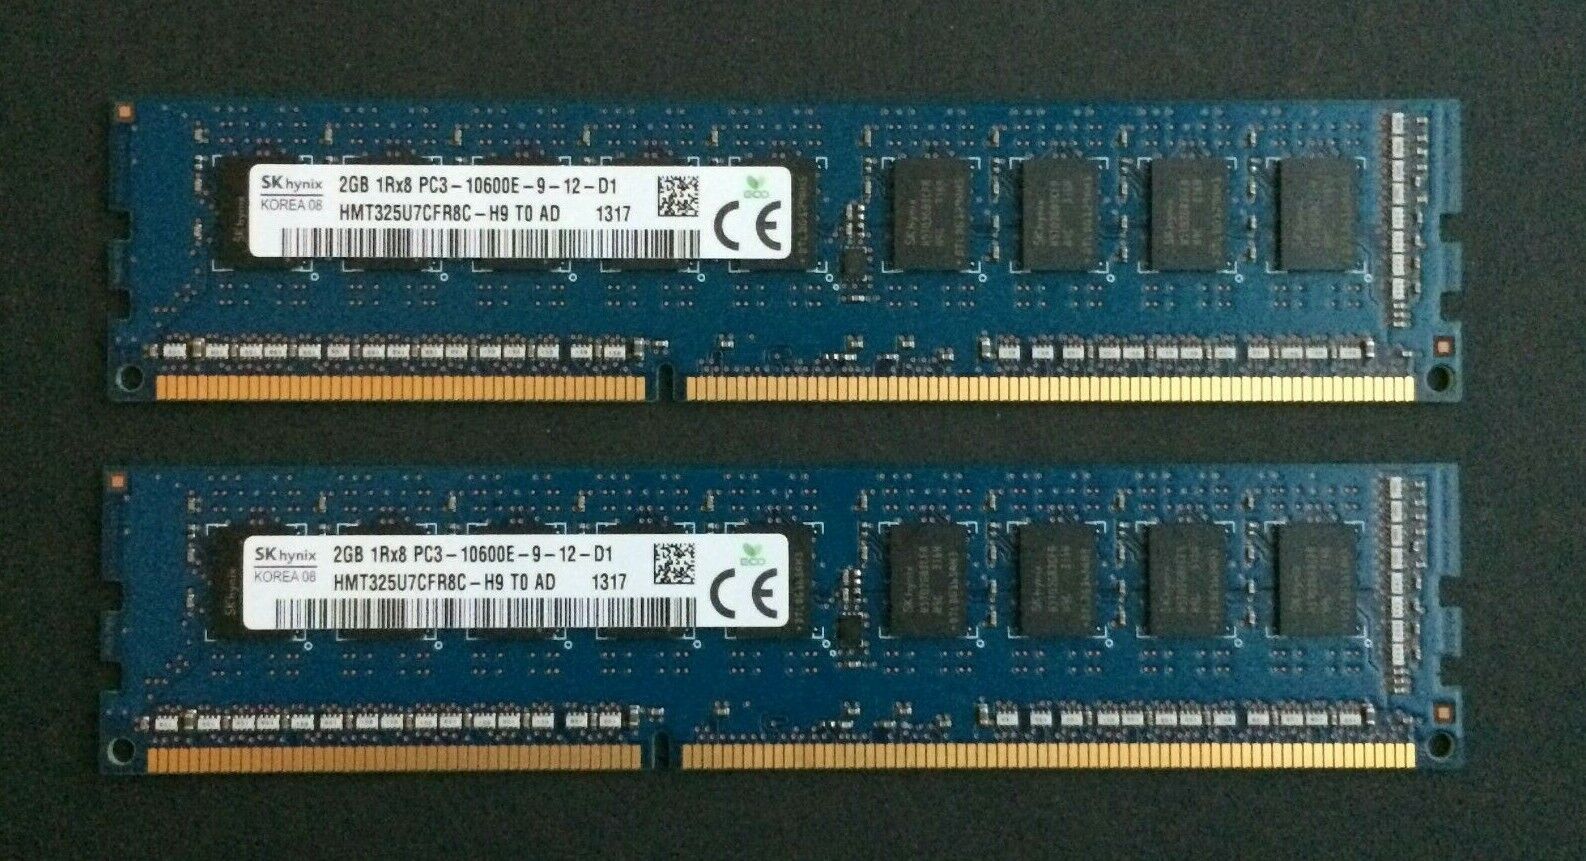 SK Hynix RAM Memory 4GB kit (2x2GB modules) DDR3 240 pins PC3-10600E